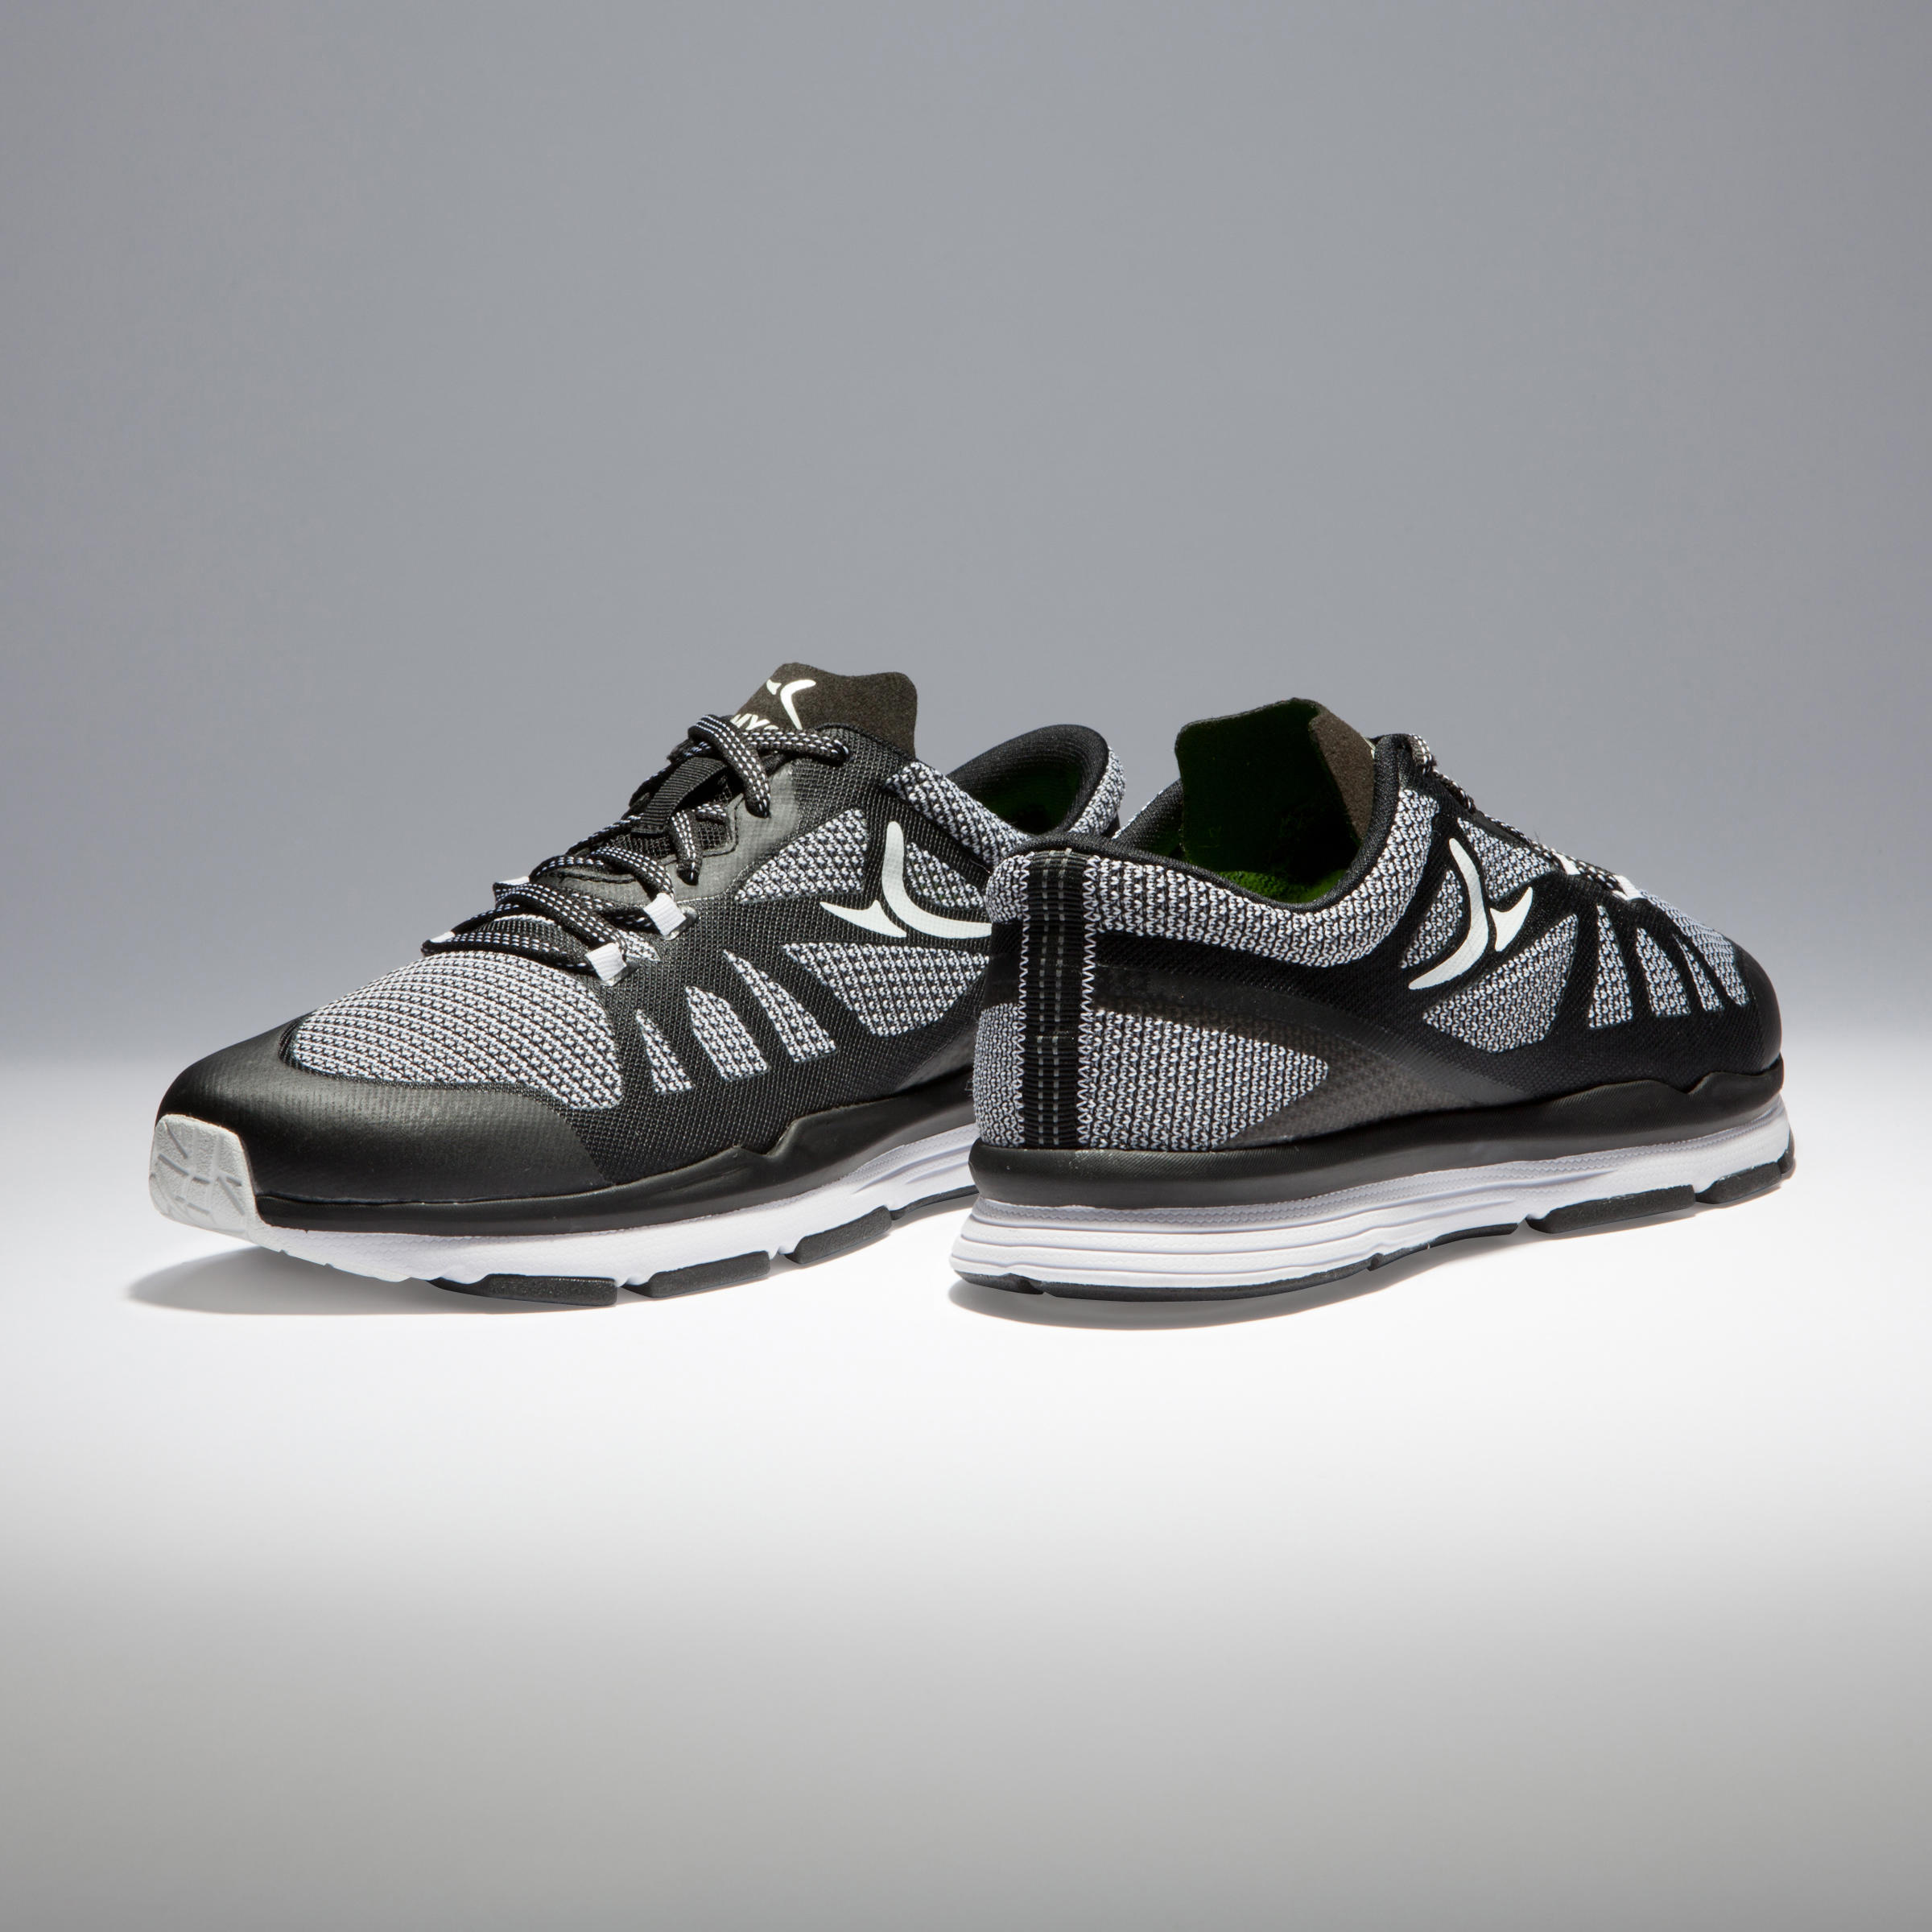 900 Women's Cardio Fitness Shoes - Black/White 8/20